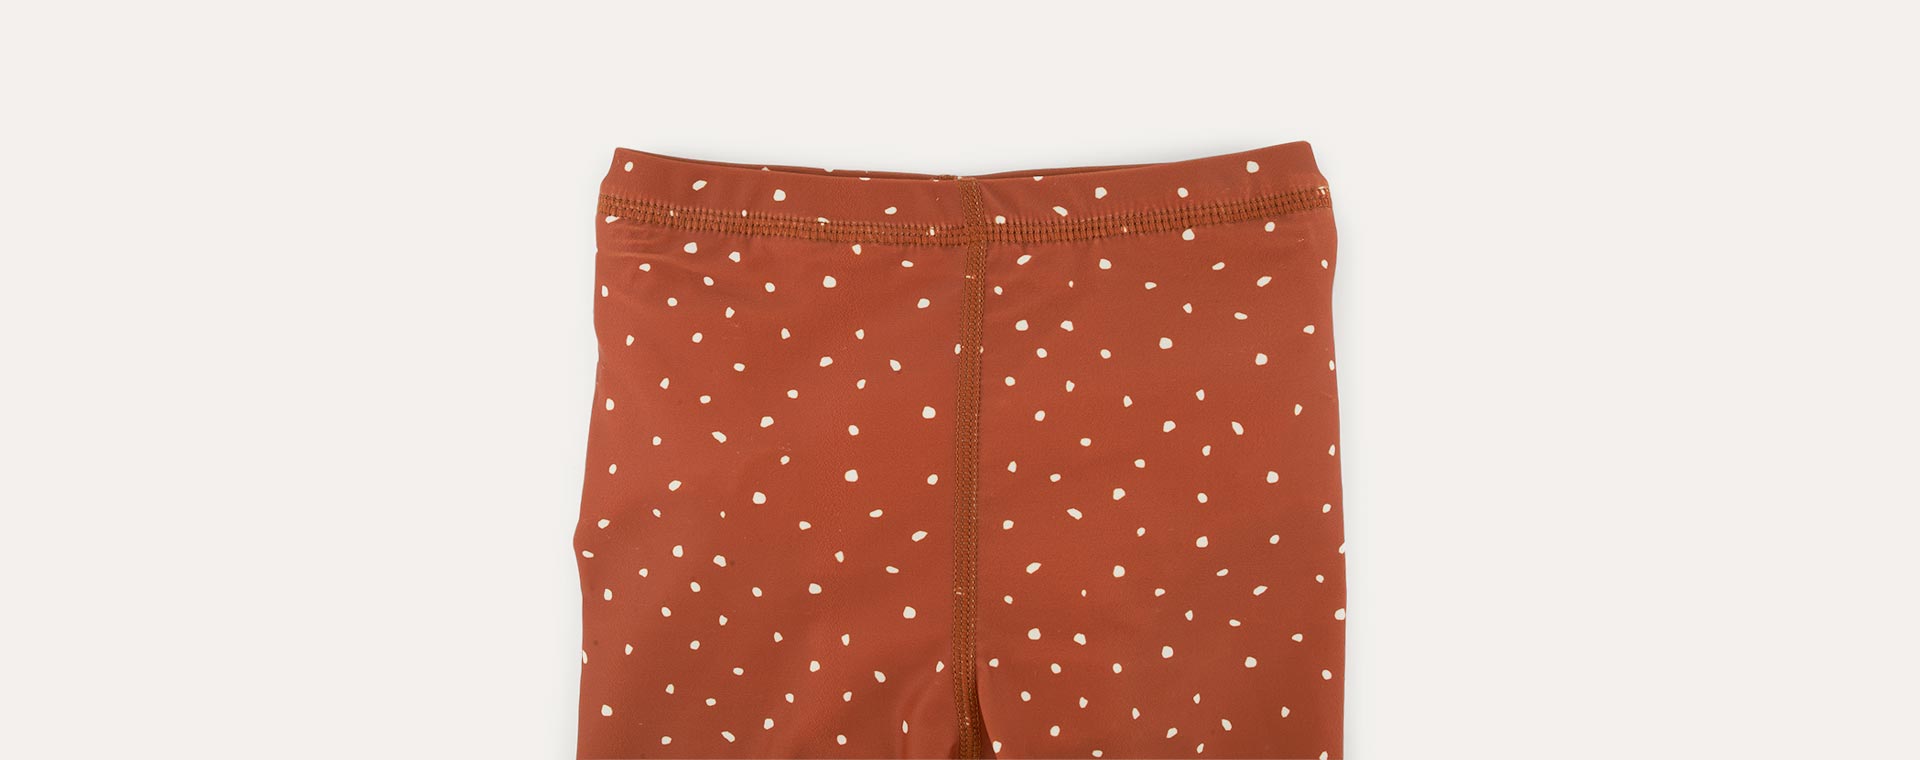 Speckles Rust Lassig Beach Shorts